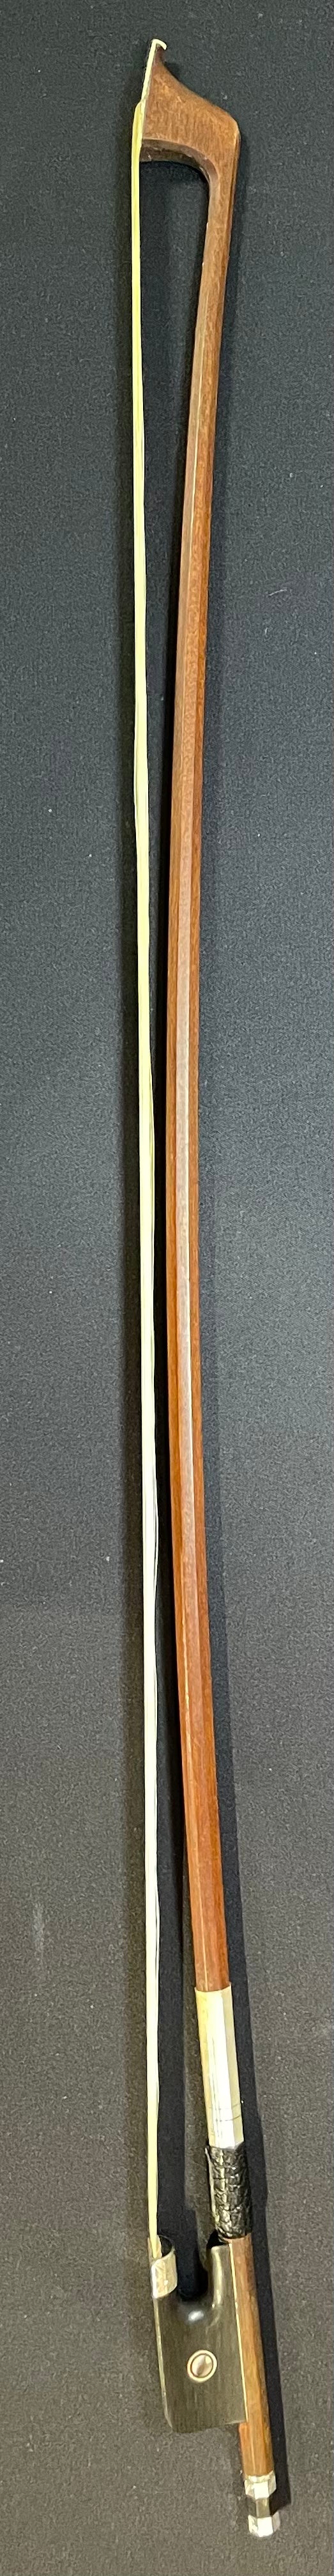 4/4 Cello Bow - Josef Sandner Wood Model